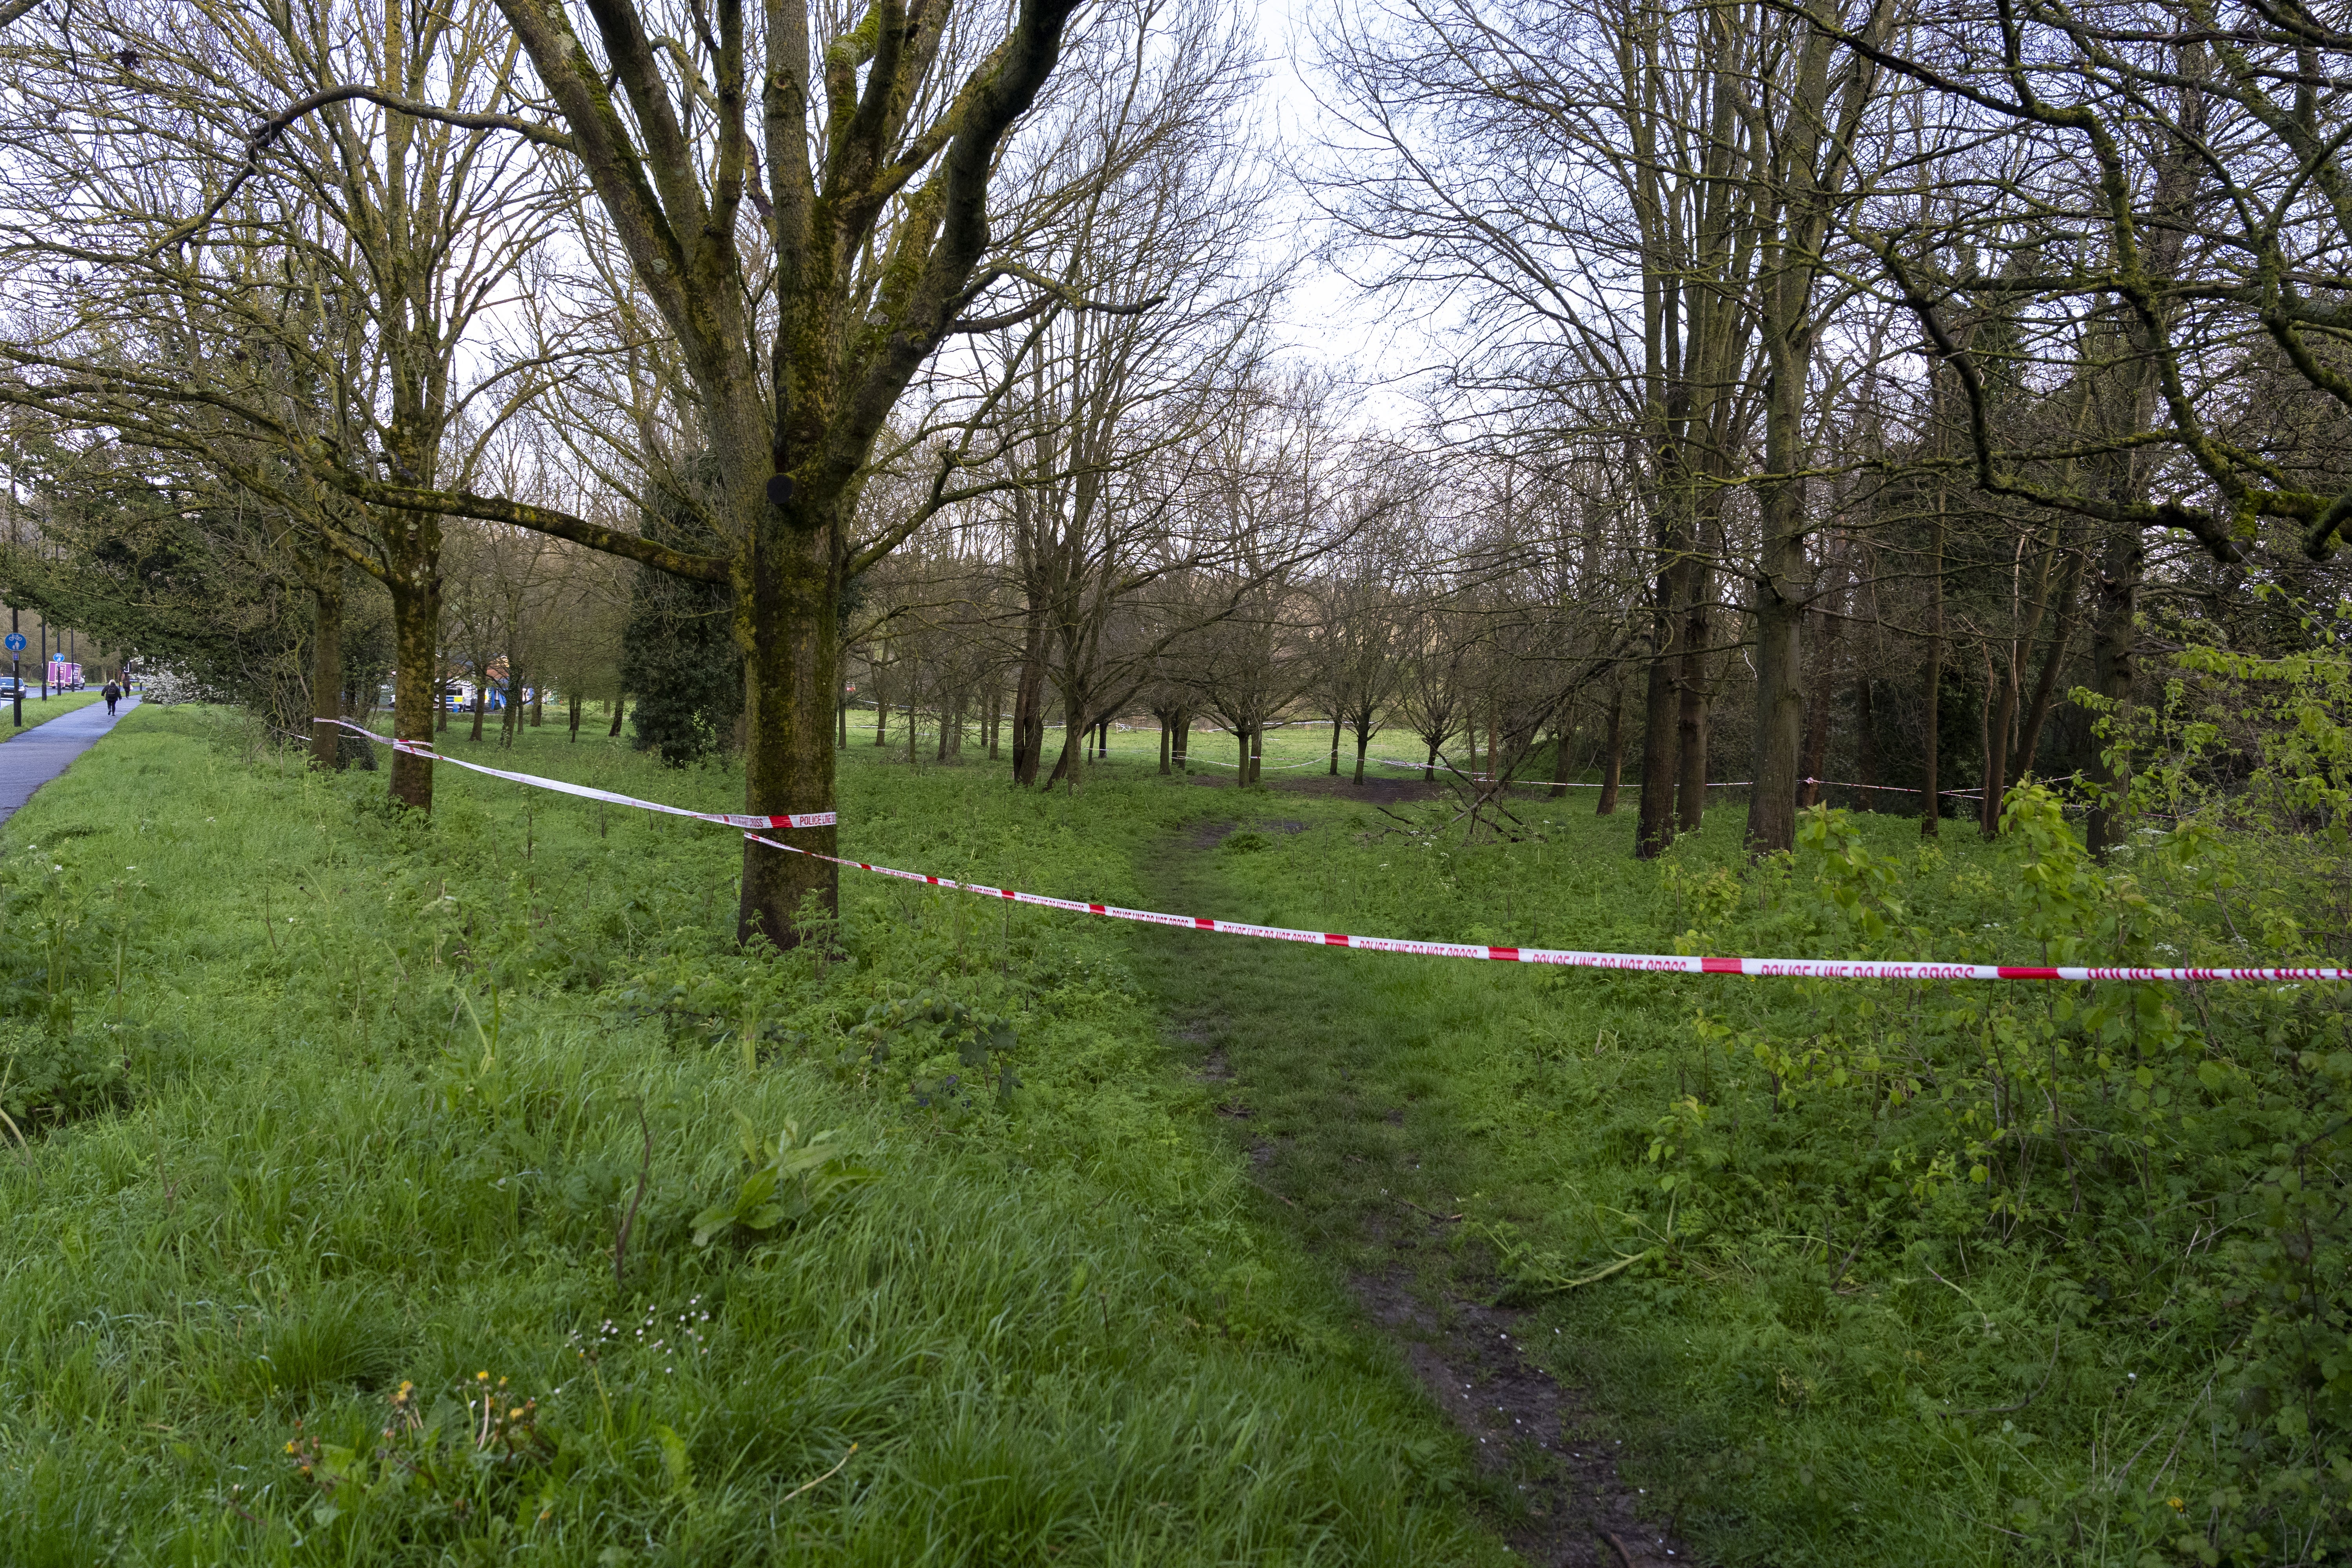 Rowdown Fields, a park in Croydon, south London where human remains were found